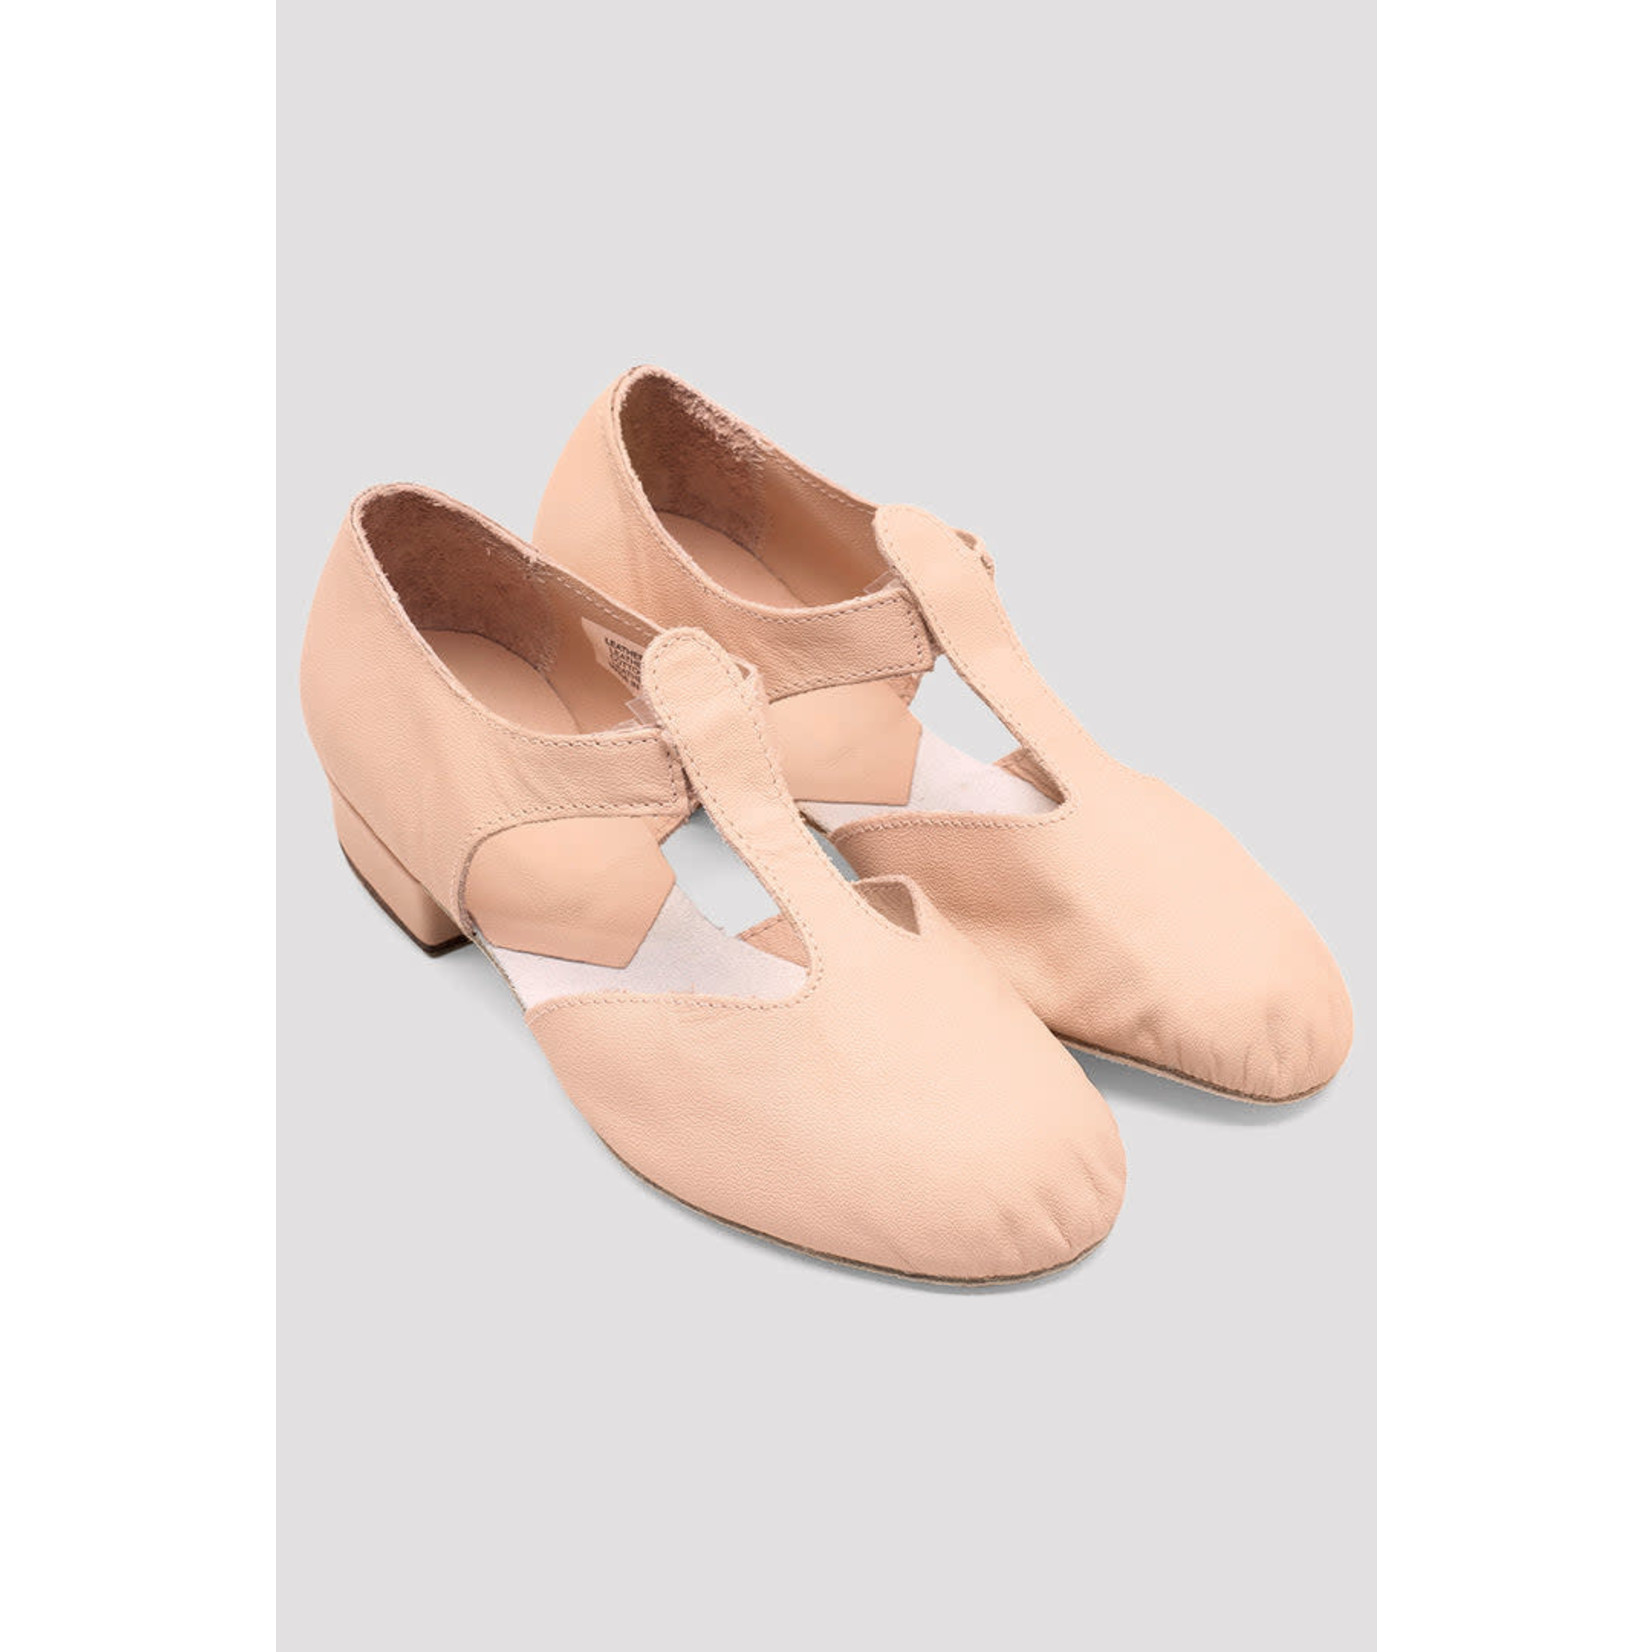 Bloch S0407L Ladies Grecian Sandal Teaching Shoes